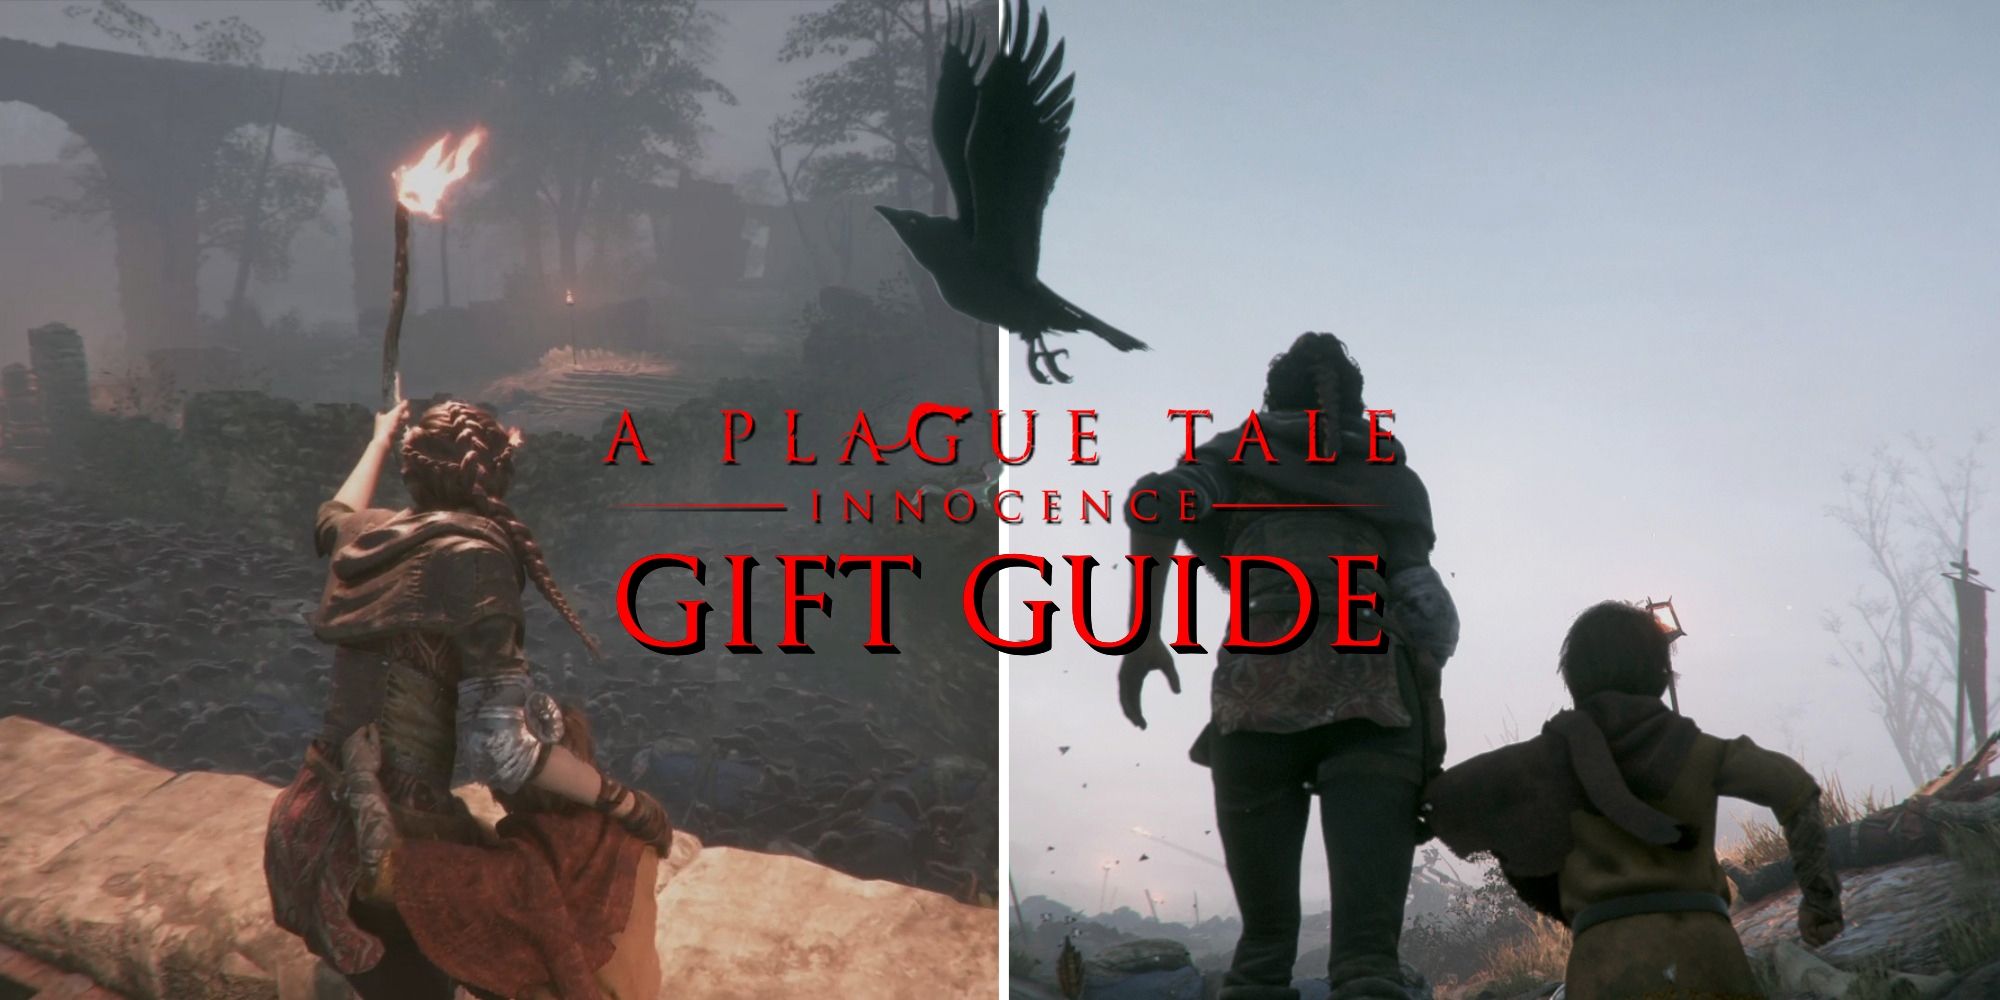 A Plague Tale: Innocence - All Tools Location